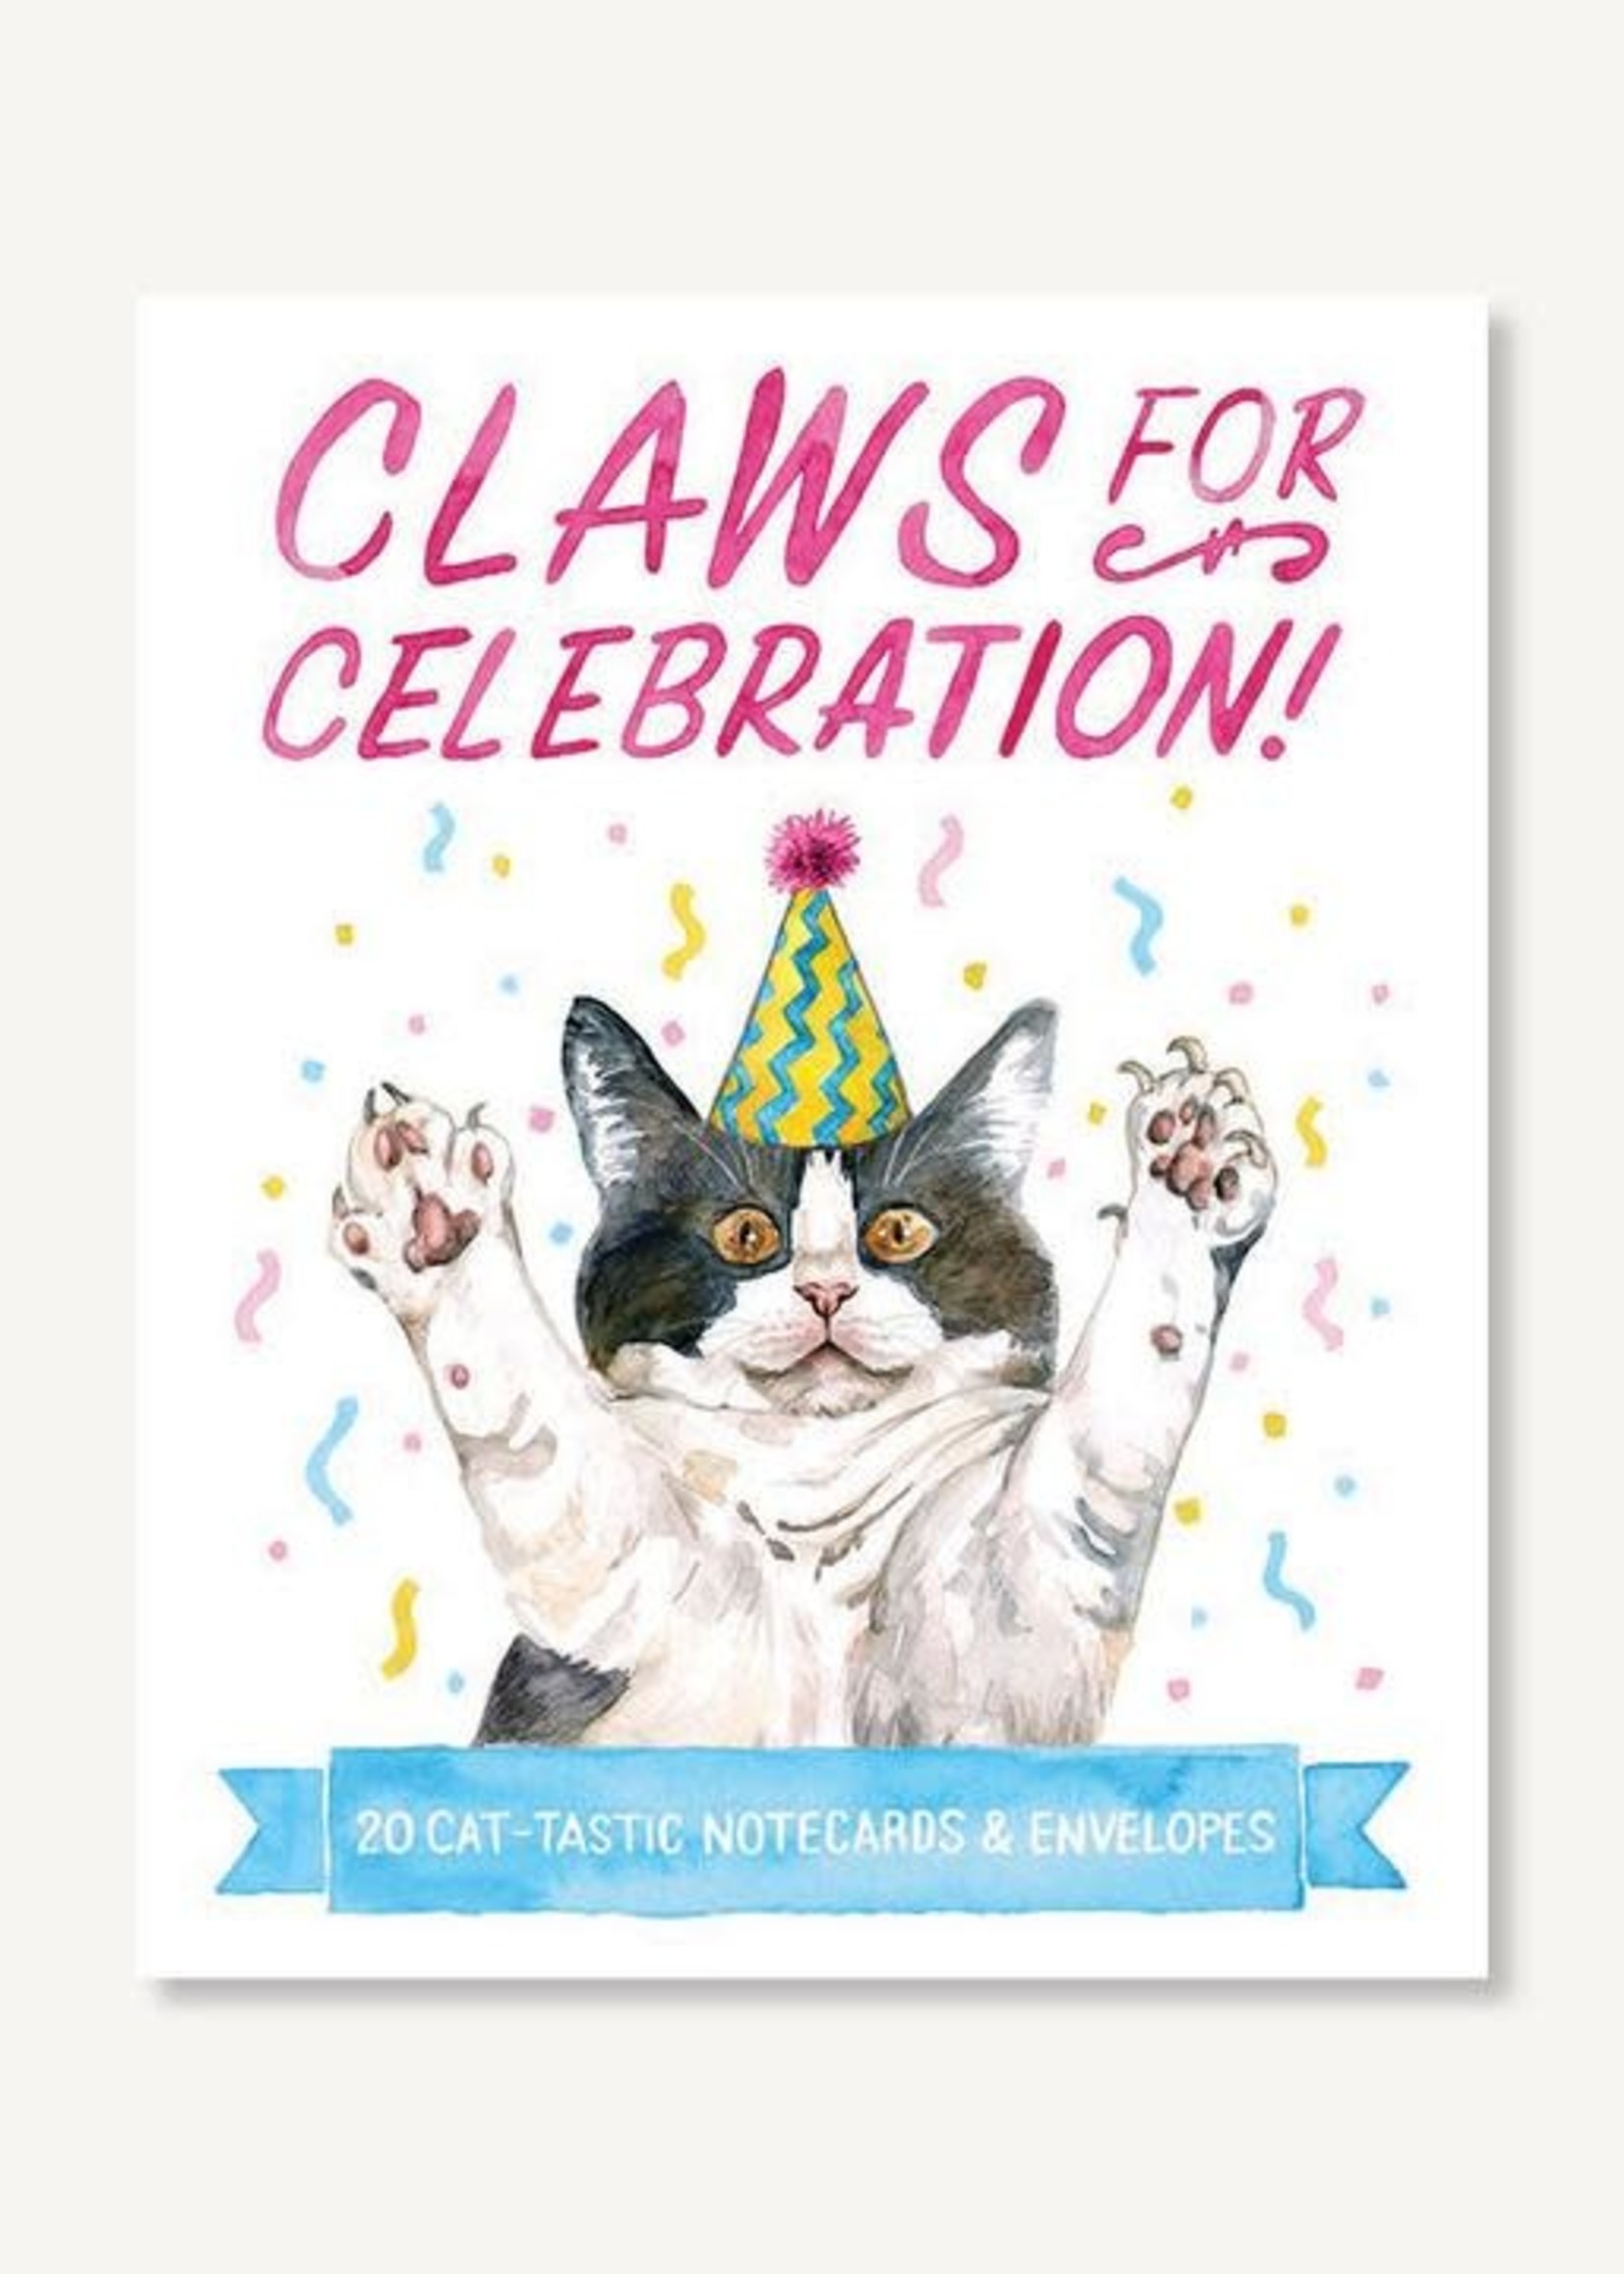 Claws for Celebration Notecards: 20 Cat-tastic Notecards & Envelopes by Megan Lynn Kott